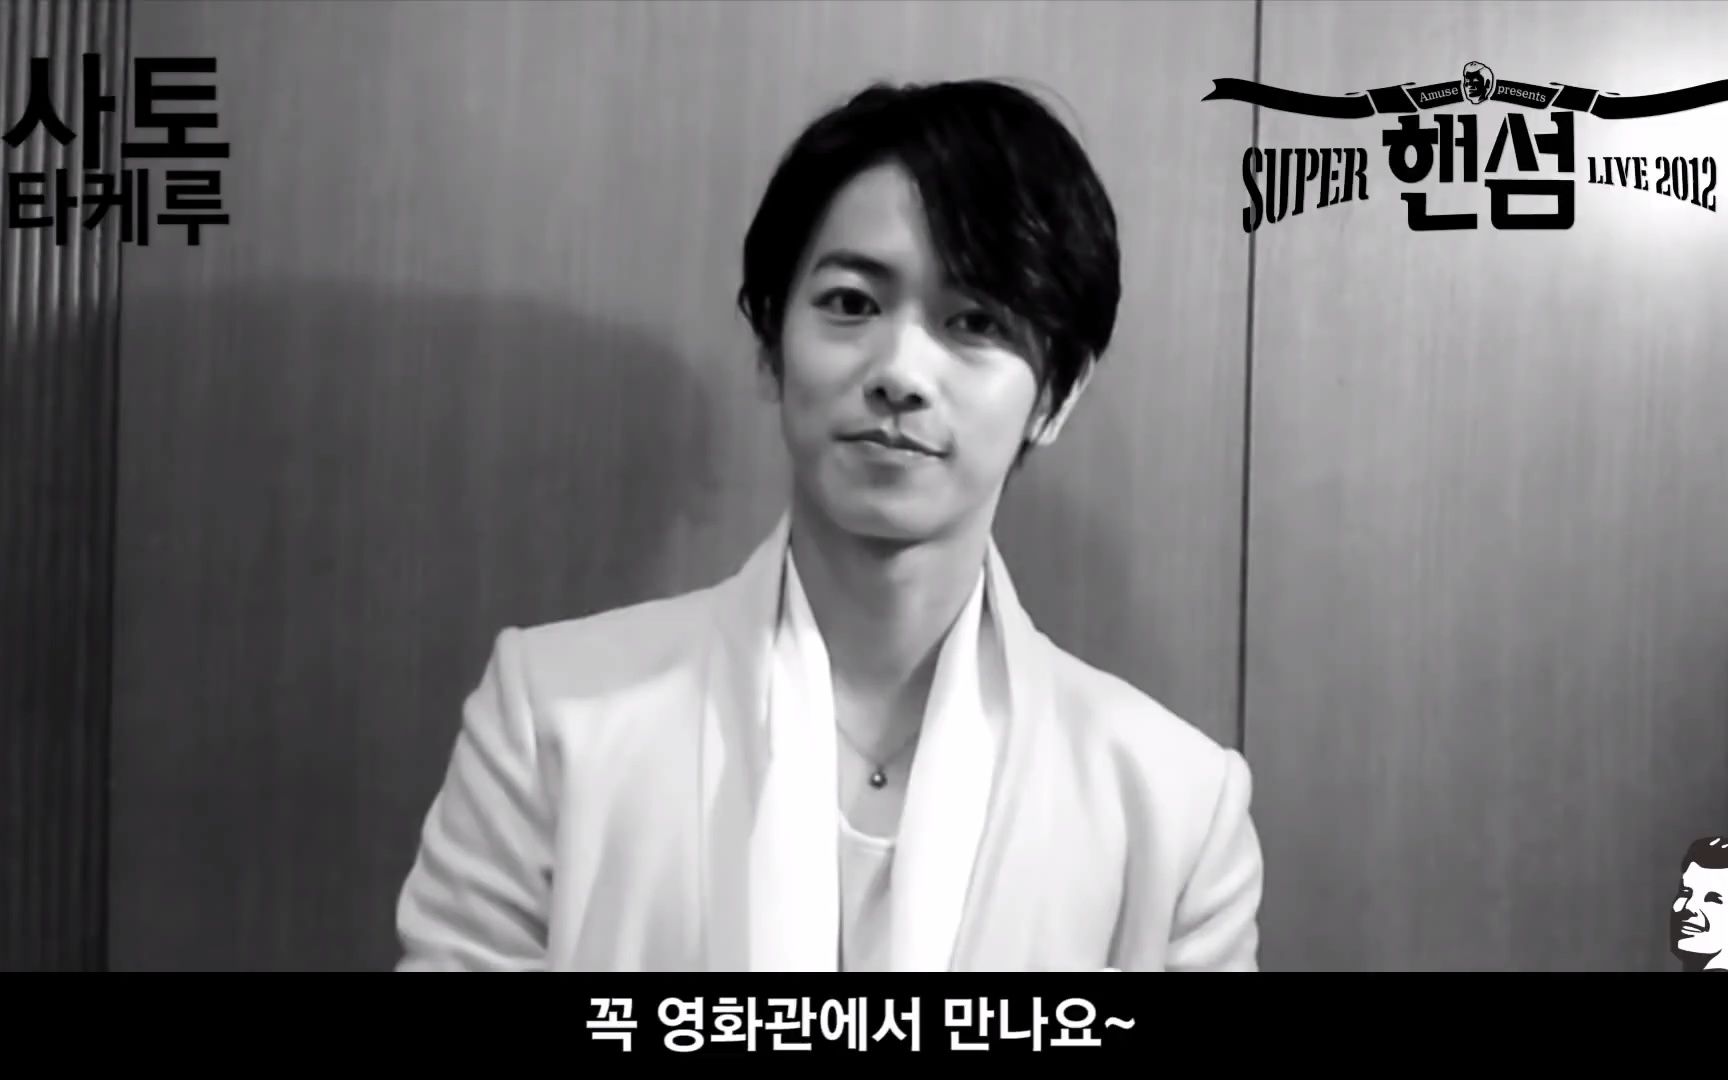 SUPER HANDSOME LIVE 2012韩国特别版宣传-哔哩哔哩